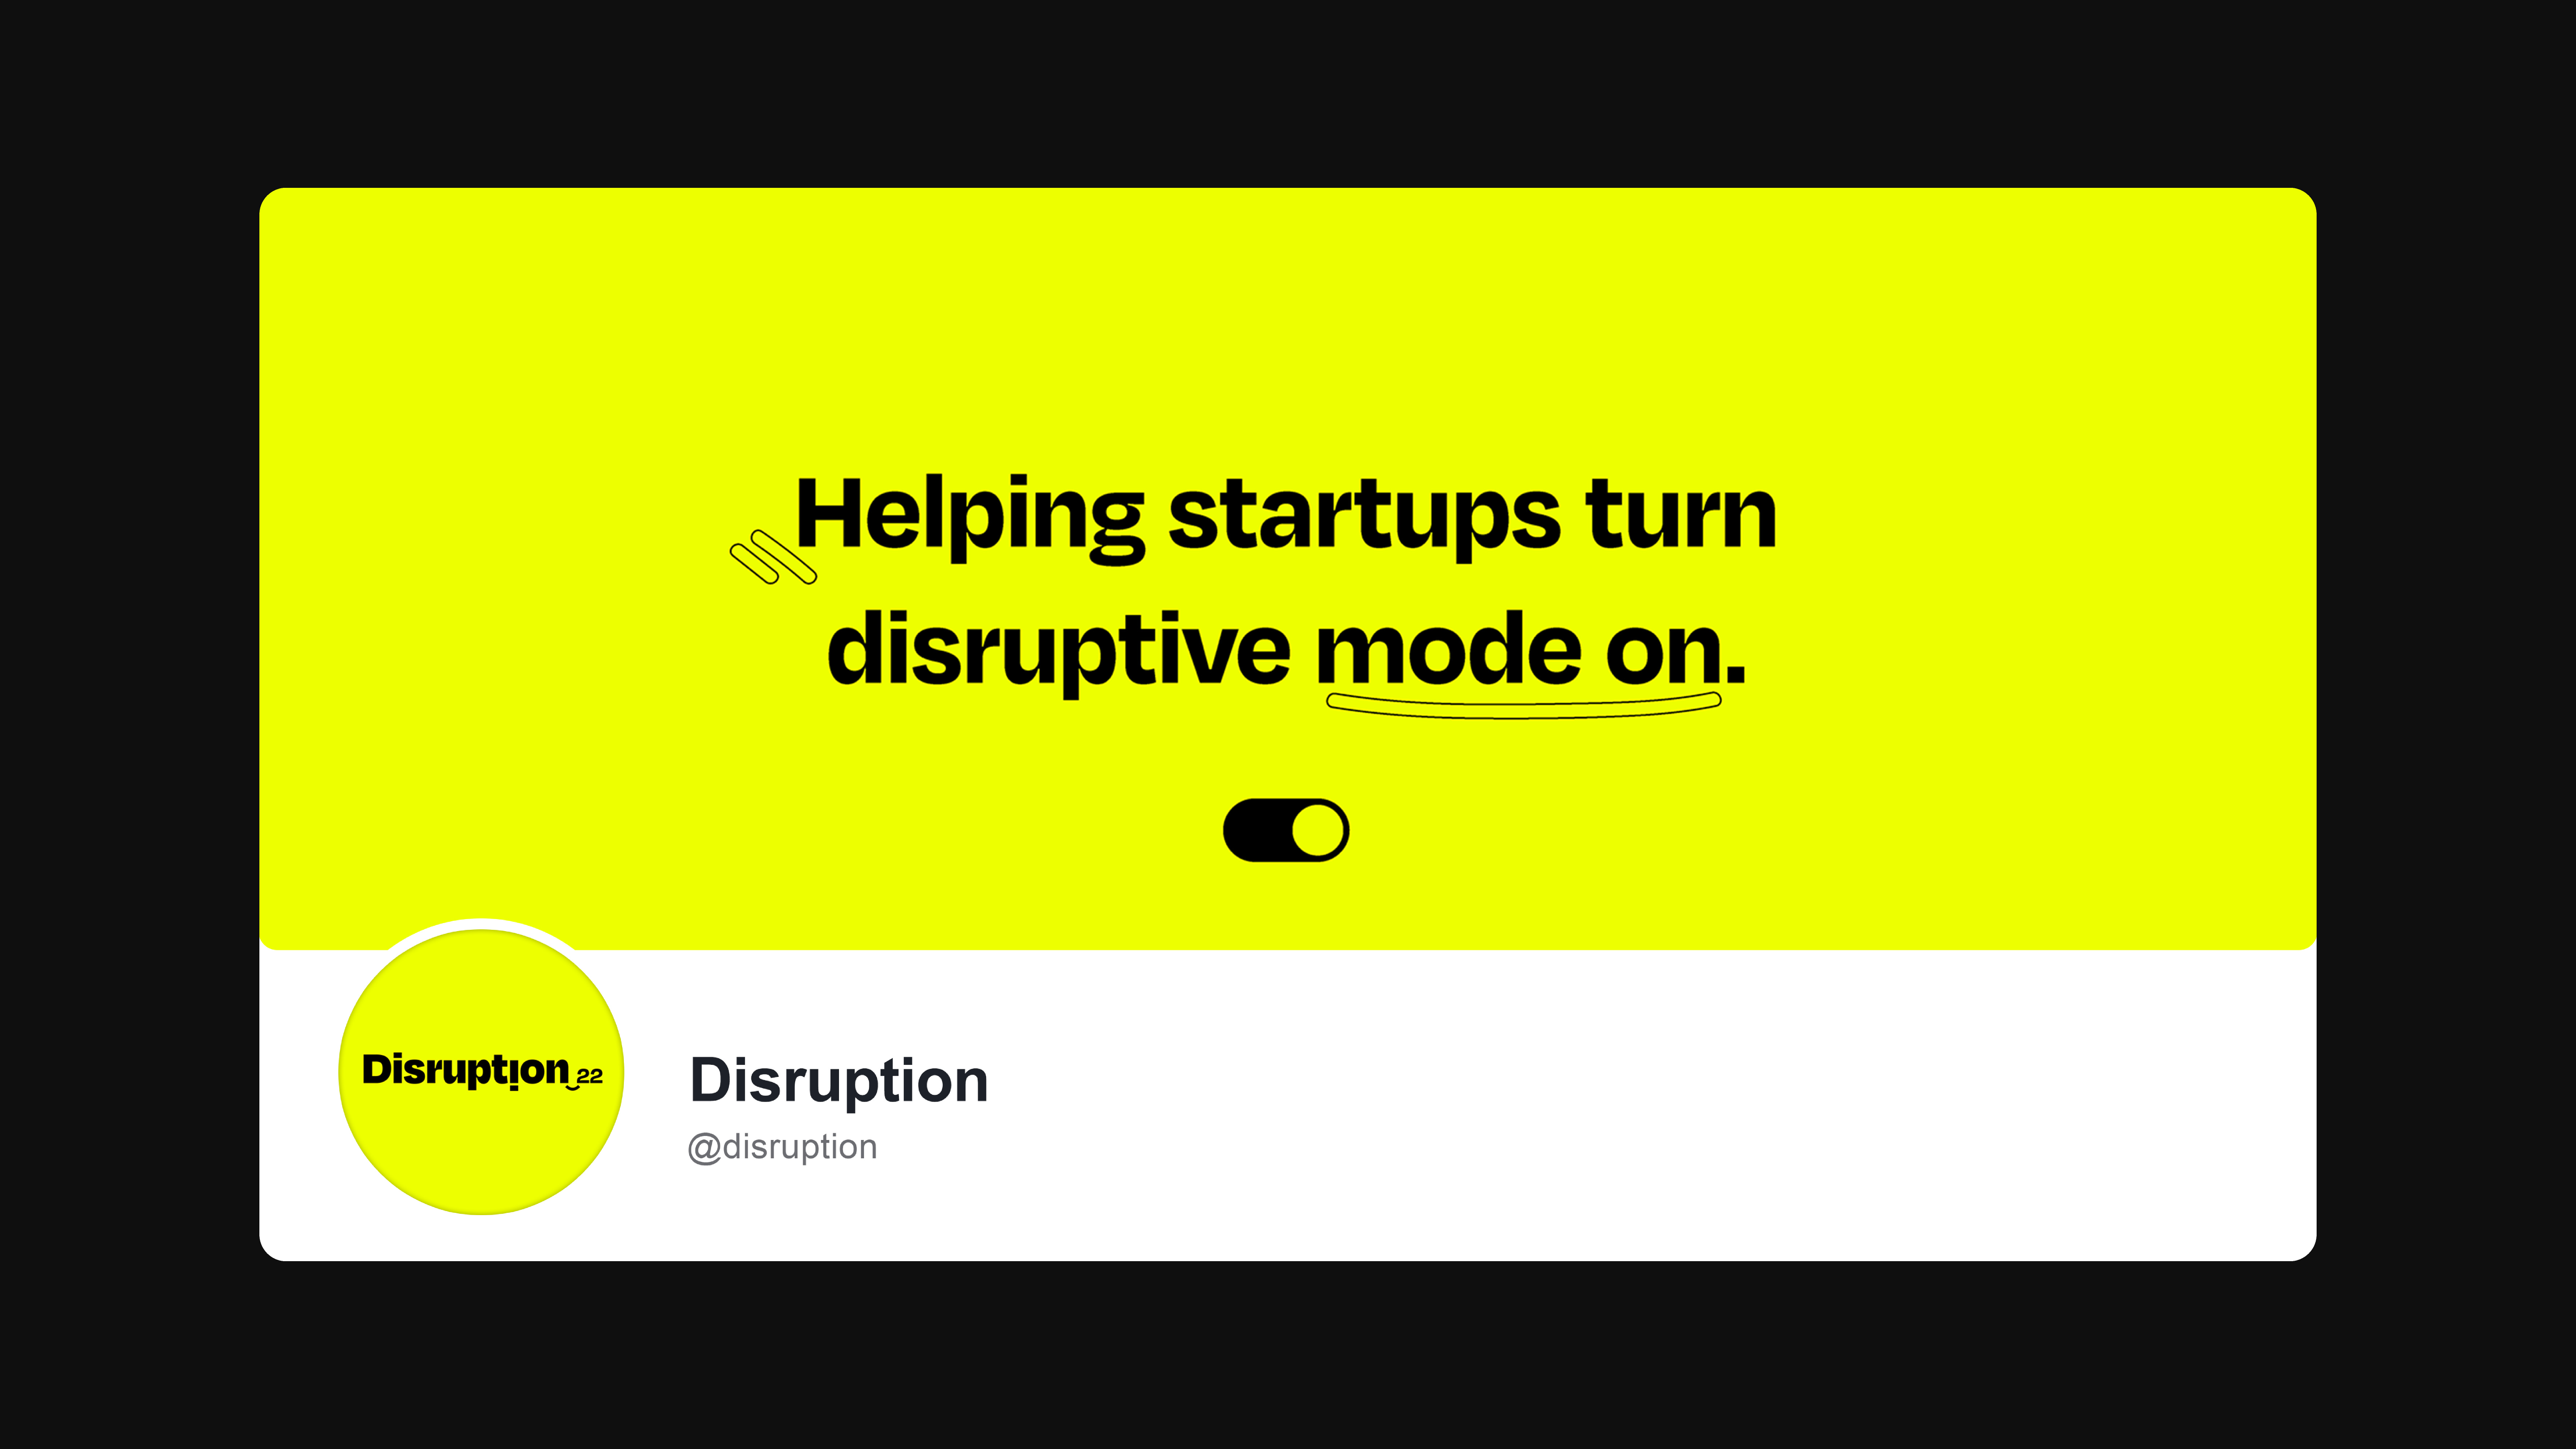 Disruption Image 1